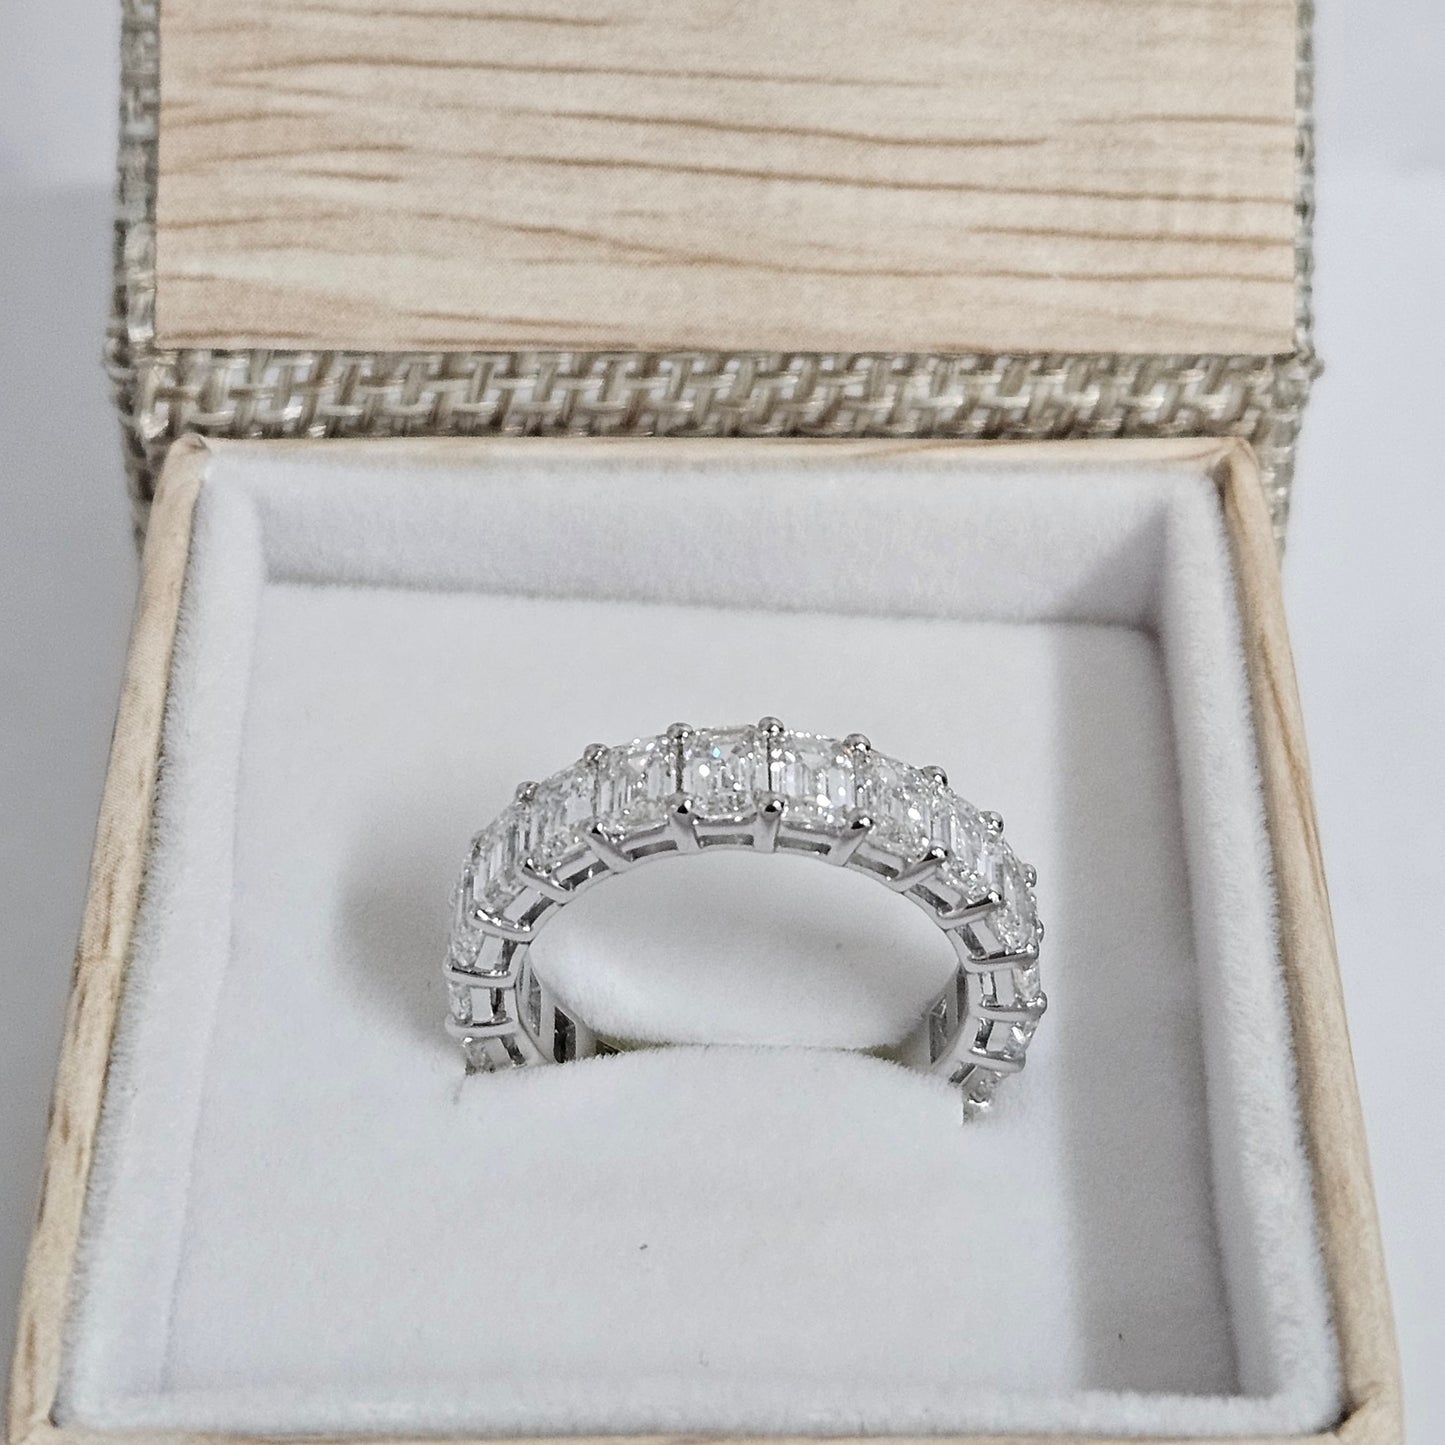 4.8ct Emerald Cut Diamond Band/Stackable Lab Grown Emerald Cut Diamond Band /Anniversary gift Ring/Stackable Diamond Ring